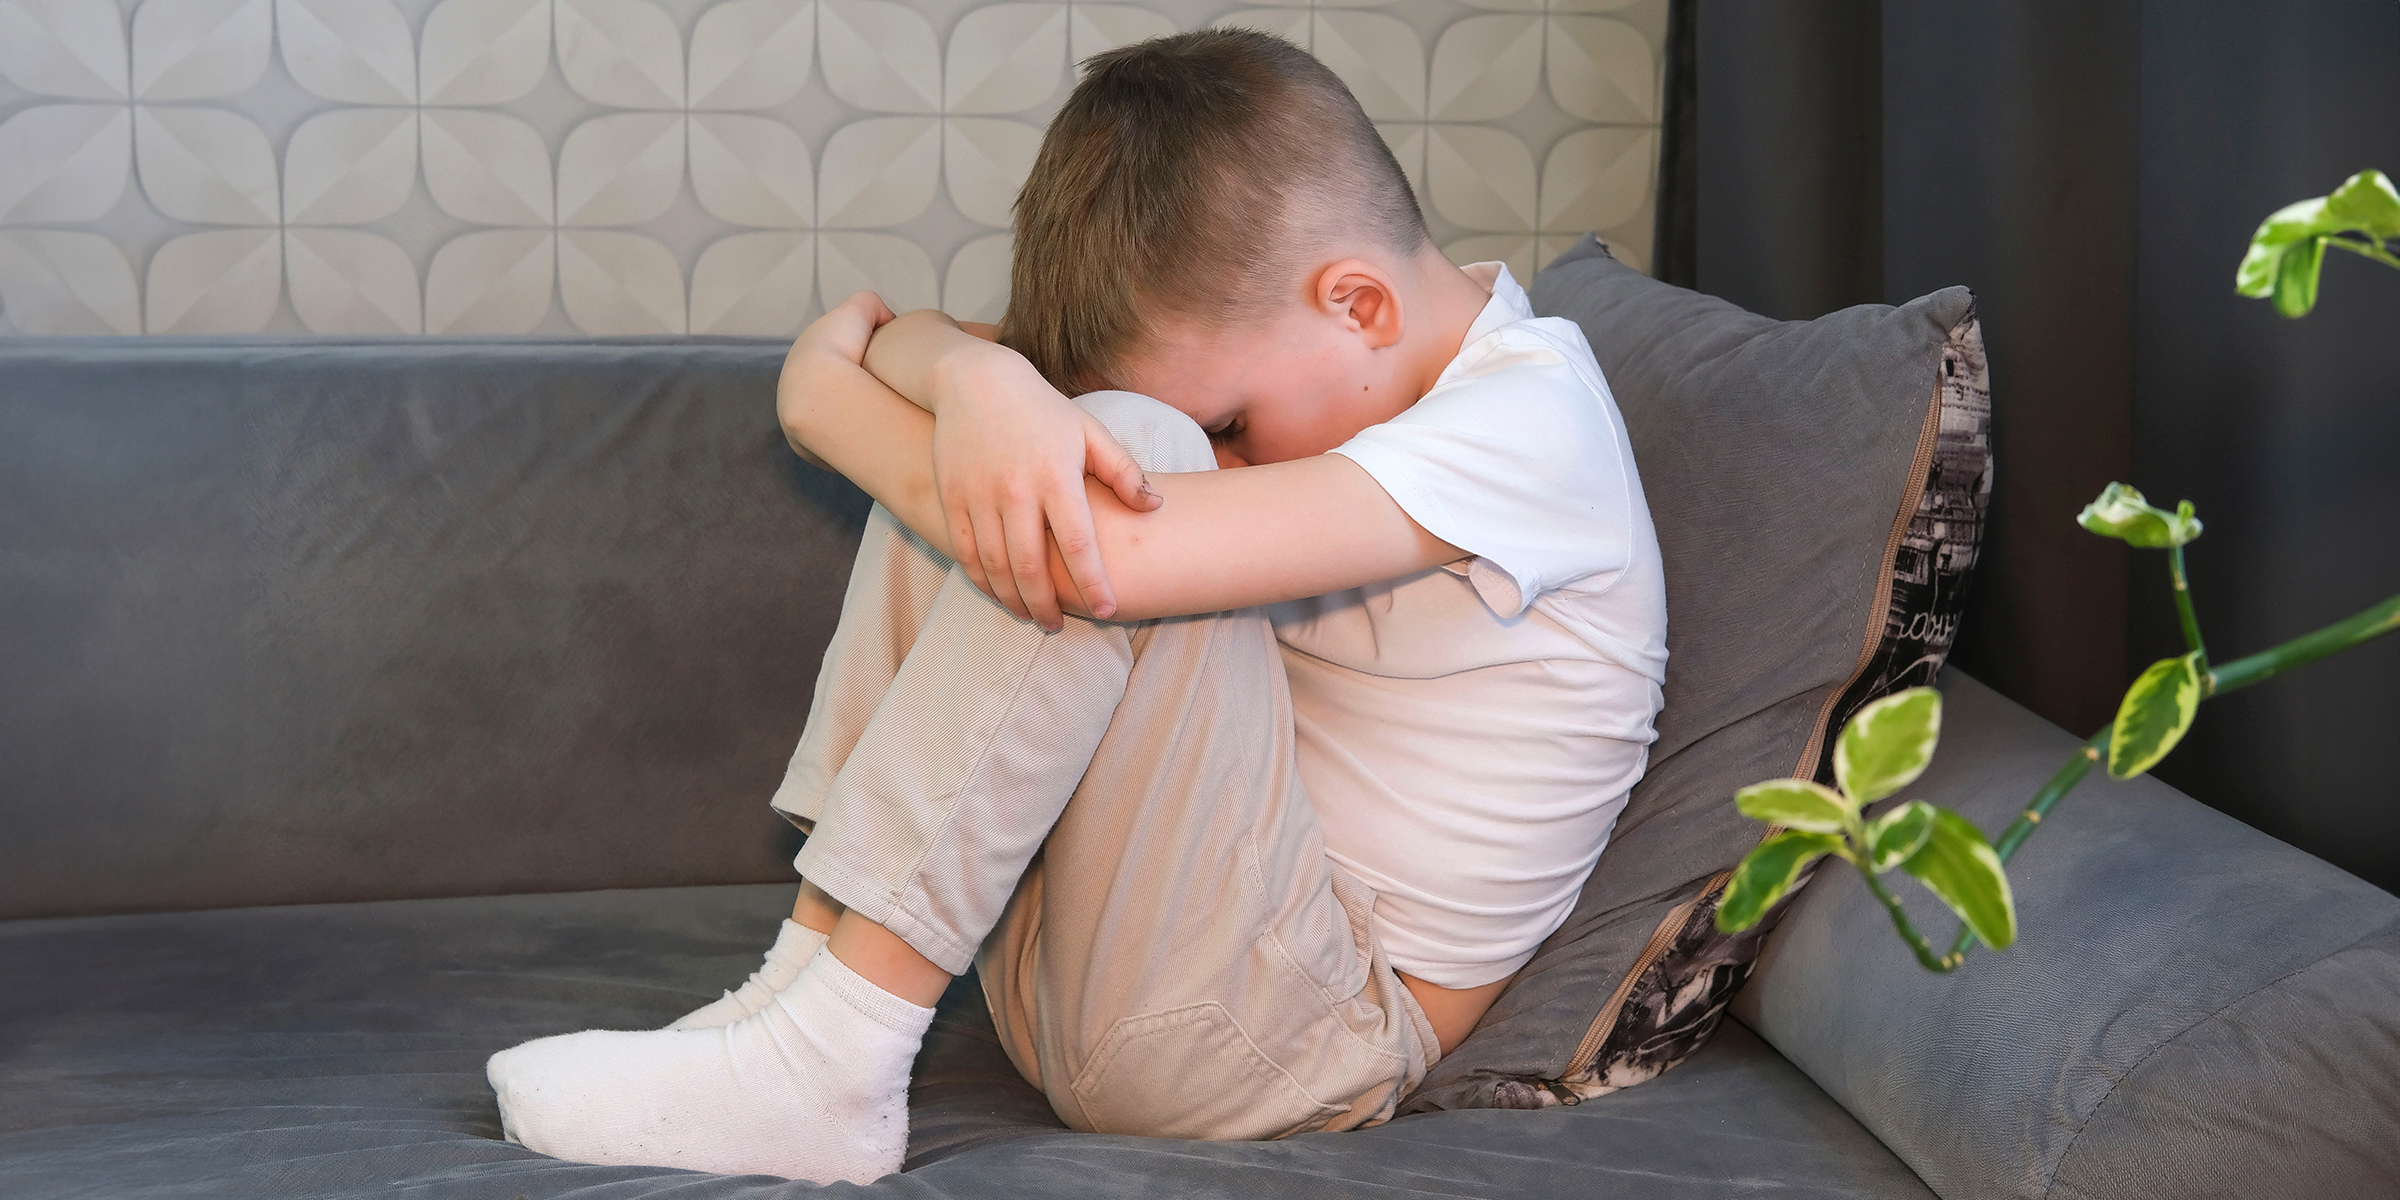 An upset little boy sitting on a couch | Source: Shutterstock